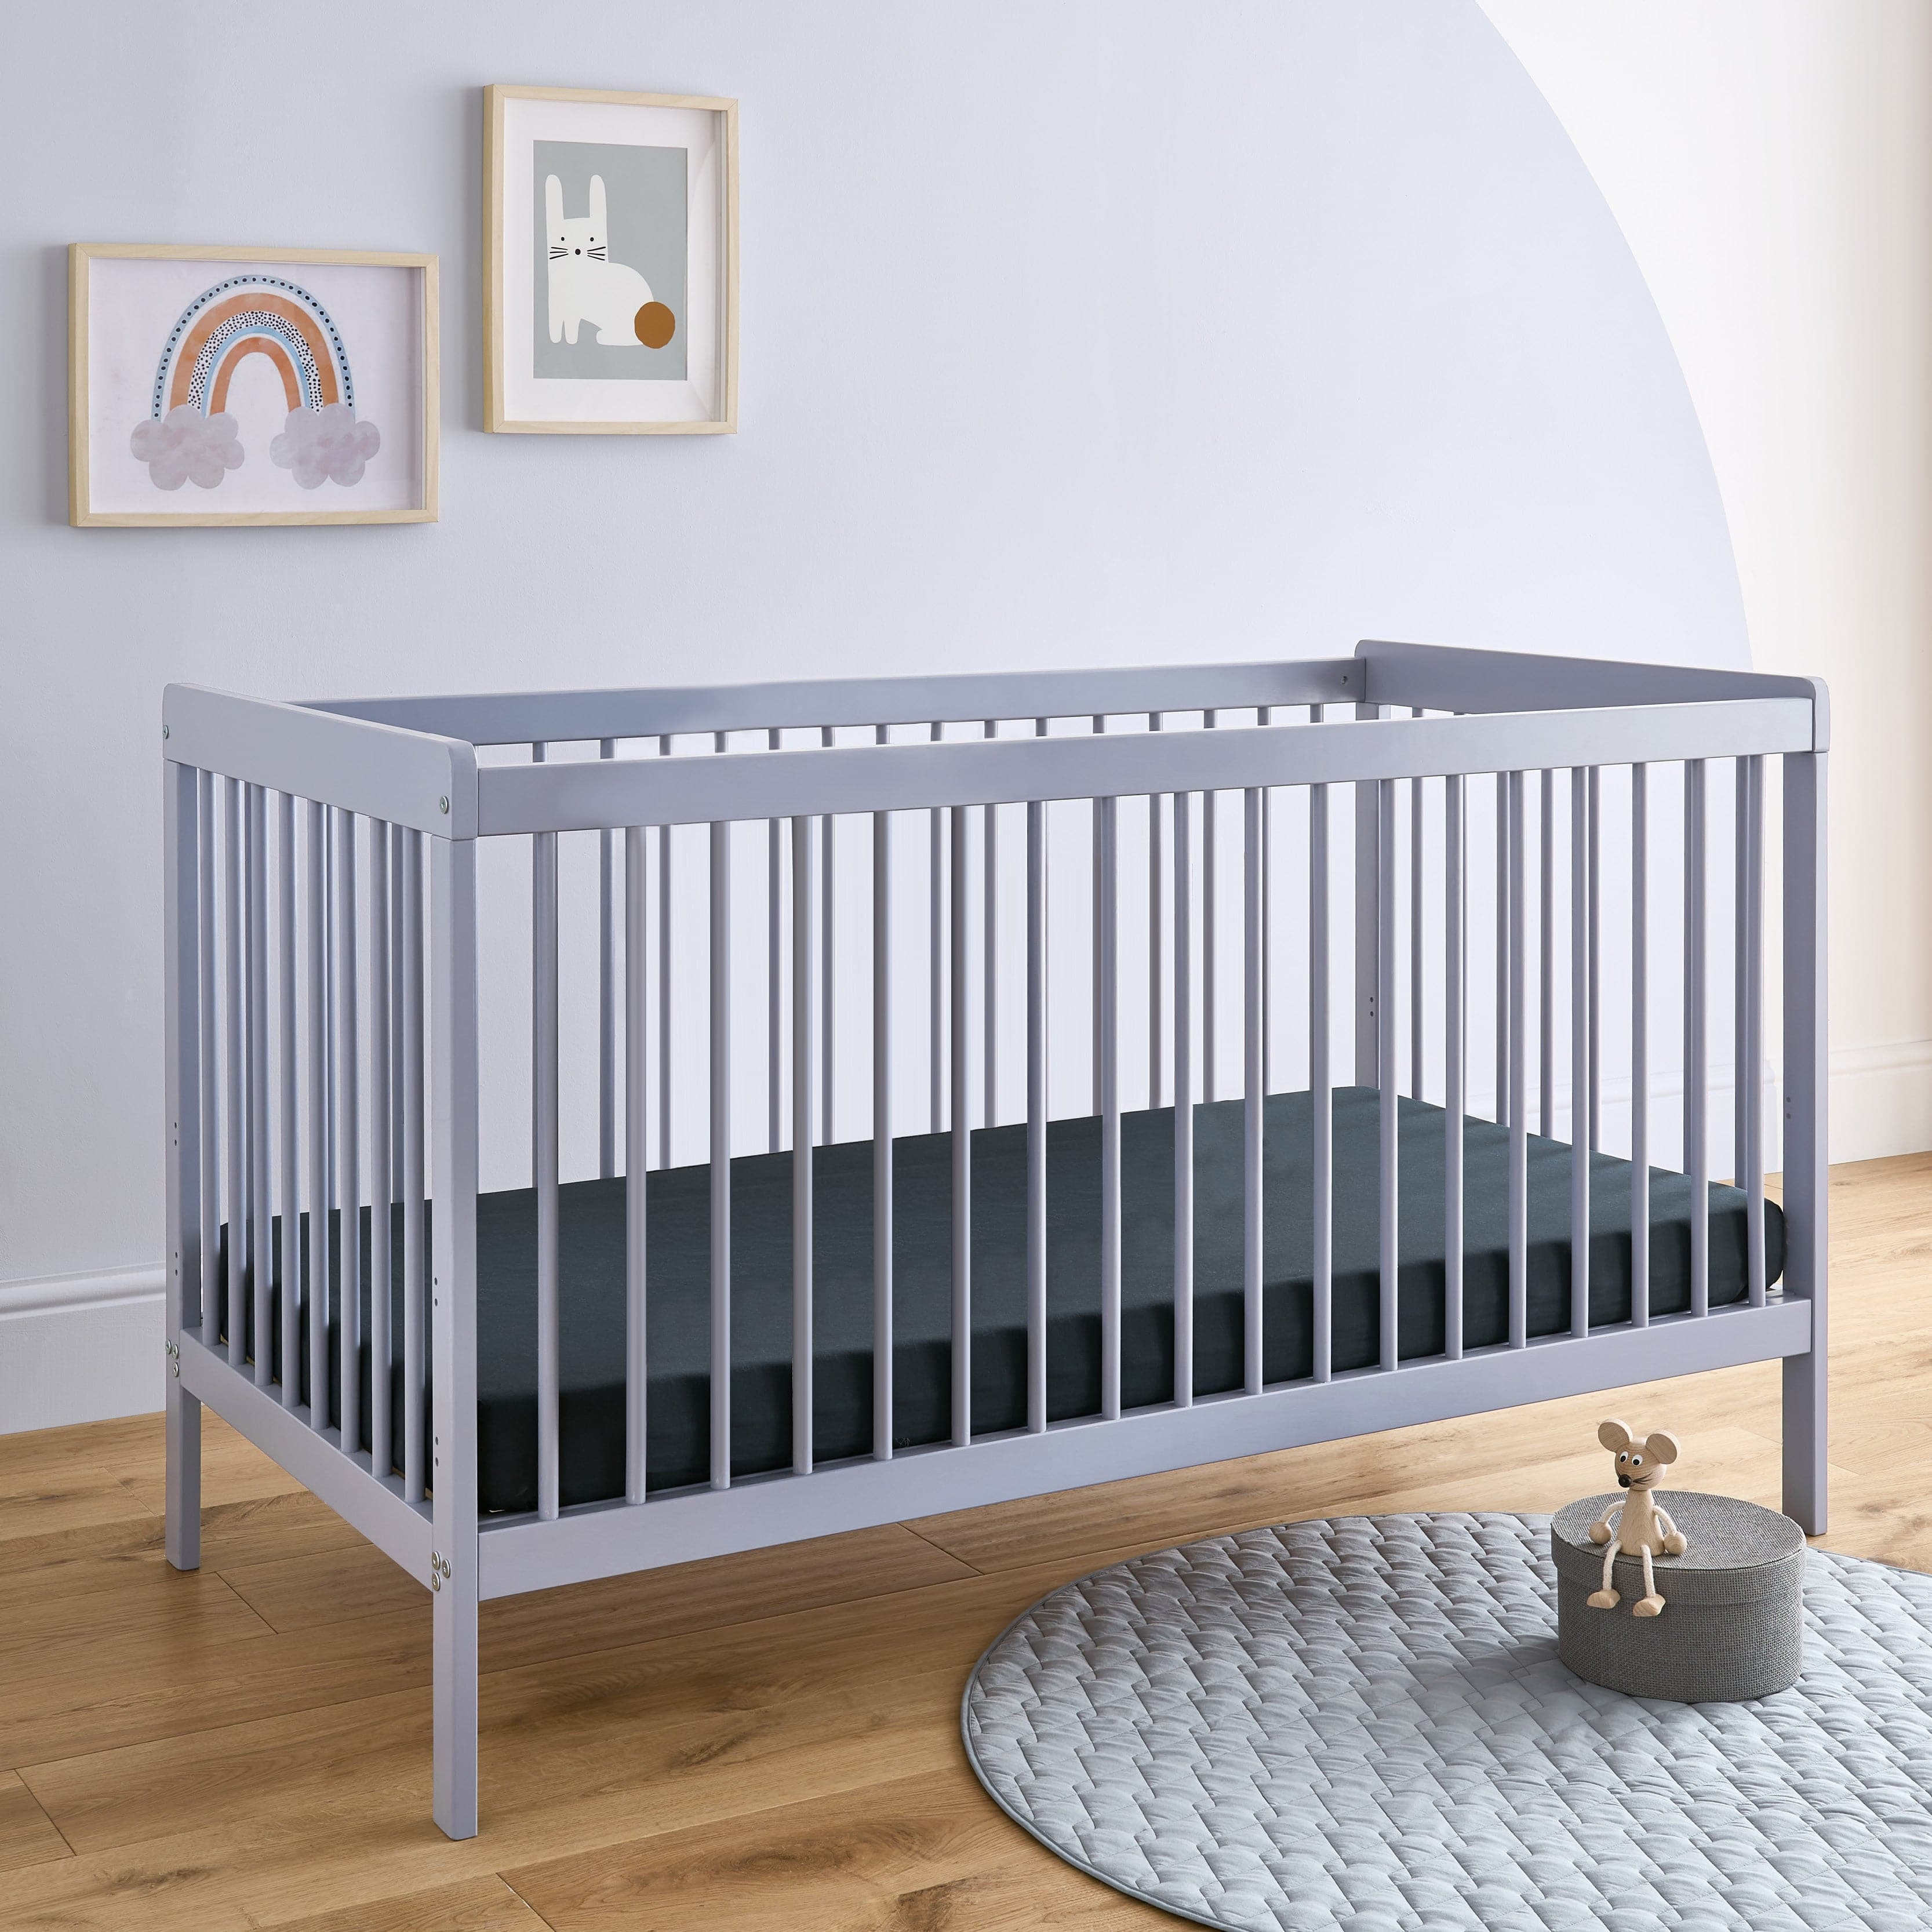 Cuddleco Nola 3 Piece Nursery Furniture Set - Flint Blue - For Your Little One